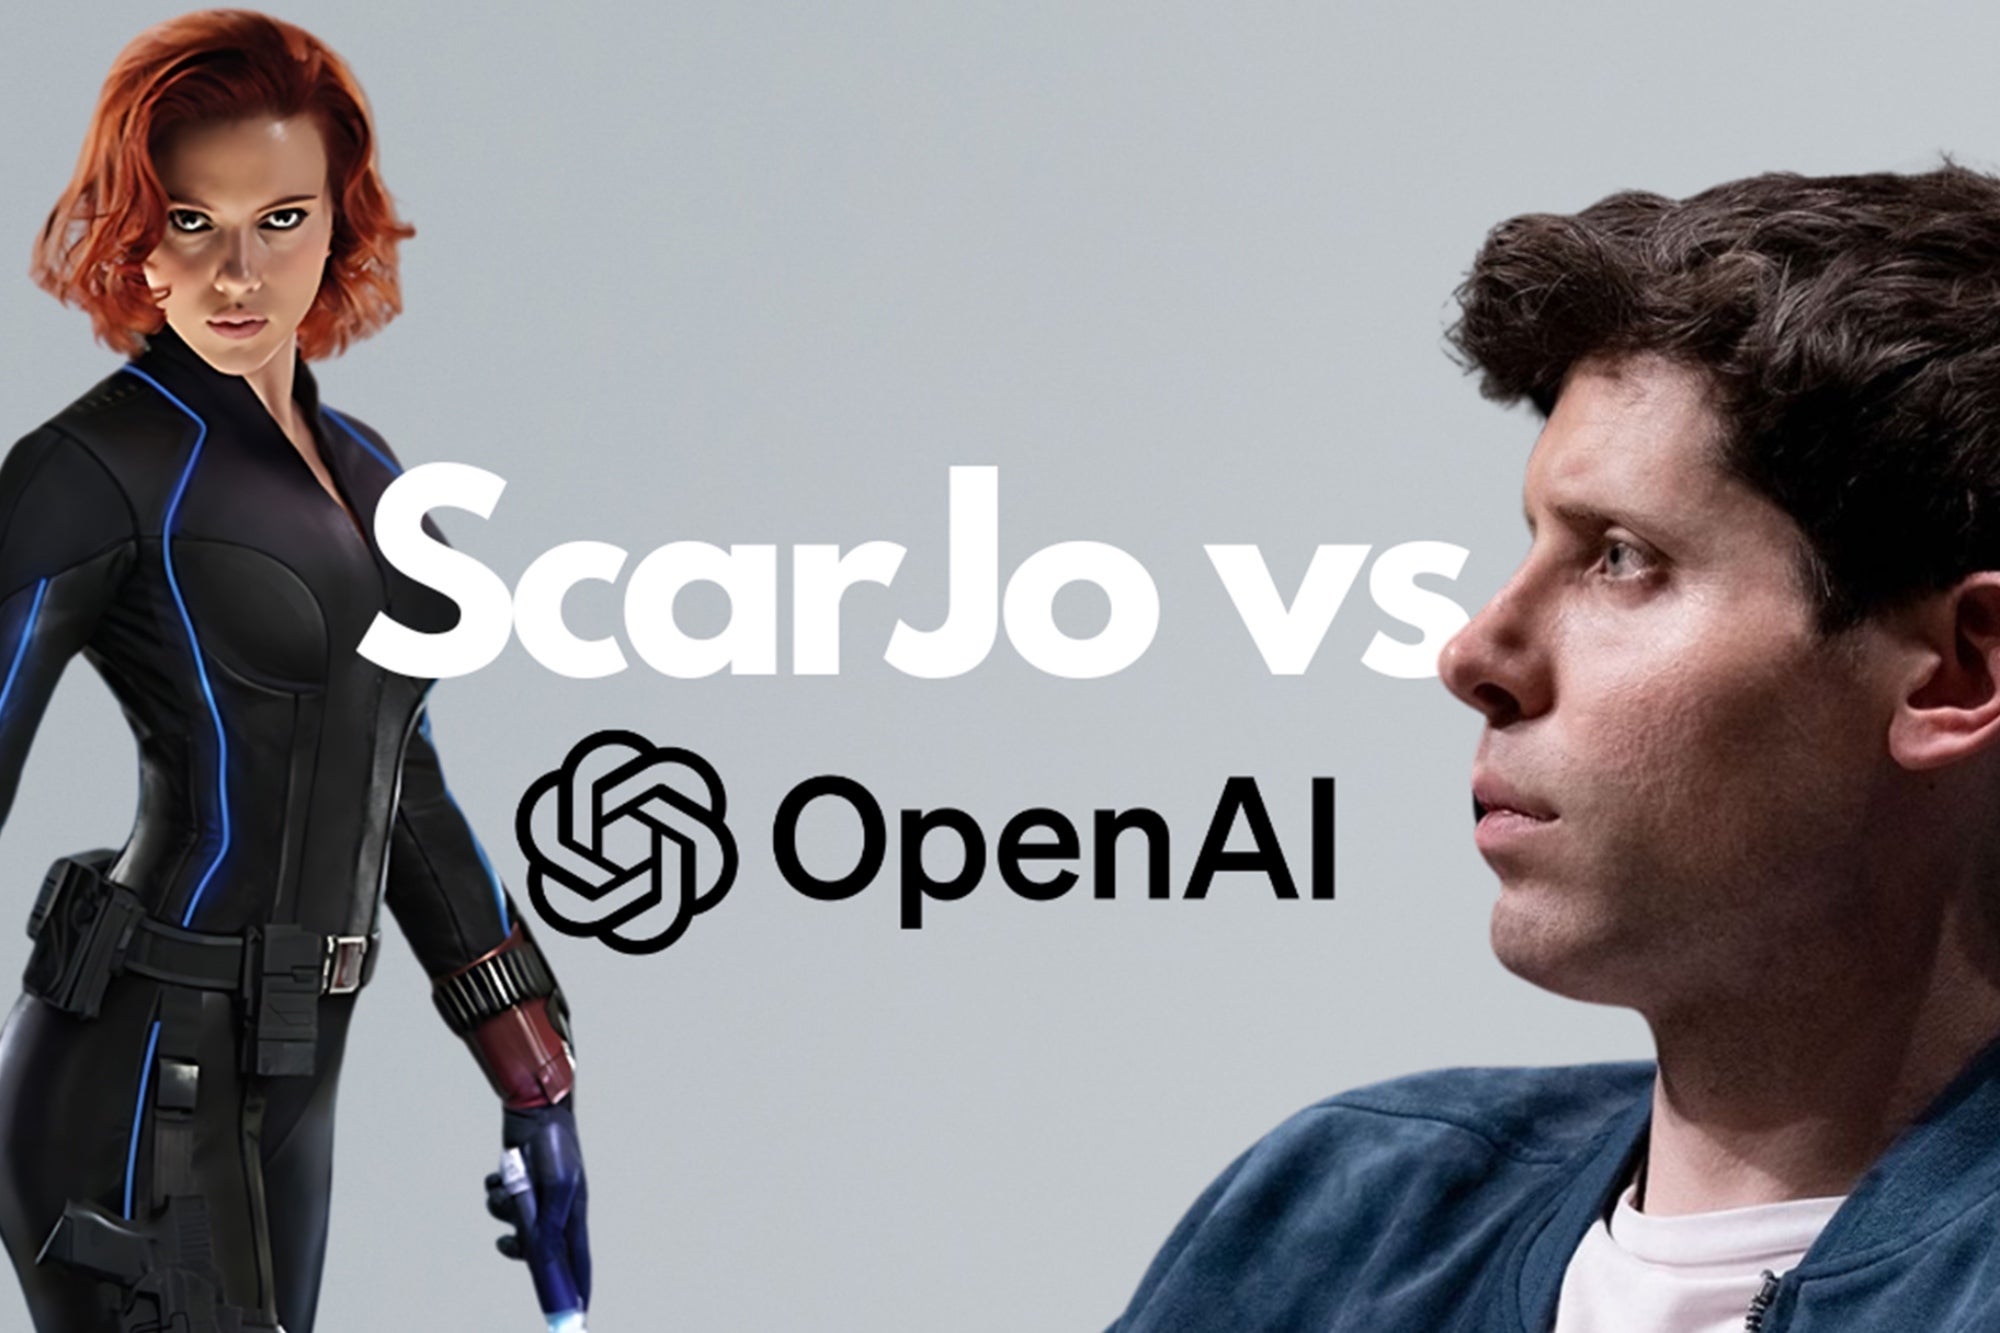 Did OpenAI steal Scarlett Johansson's voice? 5 Critical Lessons for Entrepreneurs in The AI Era